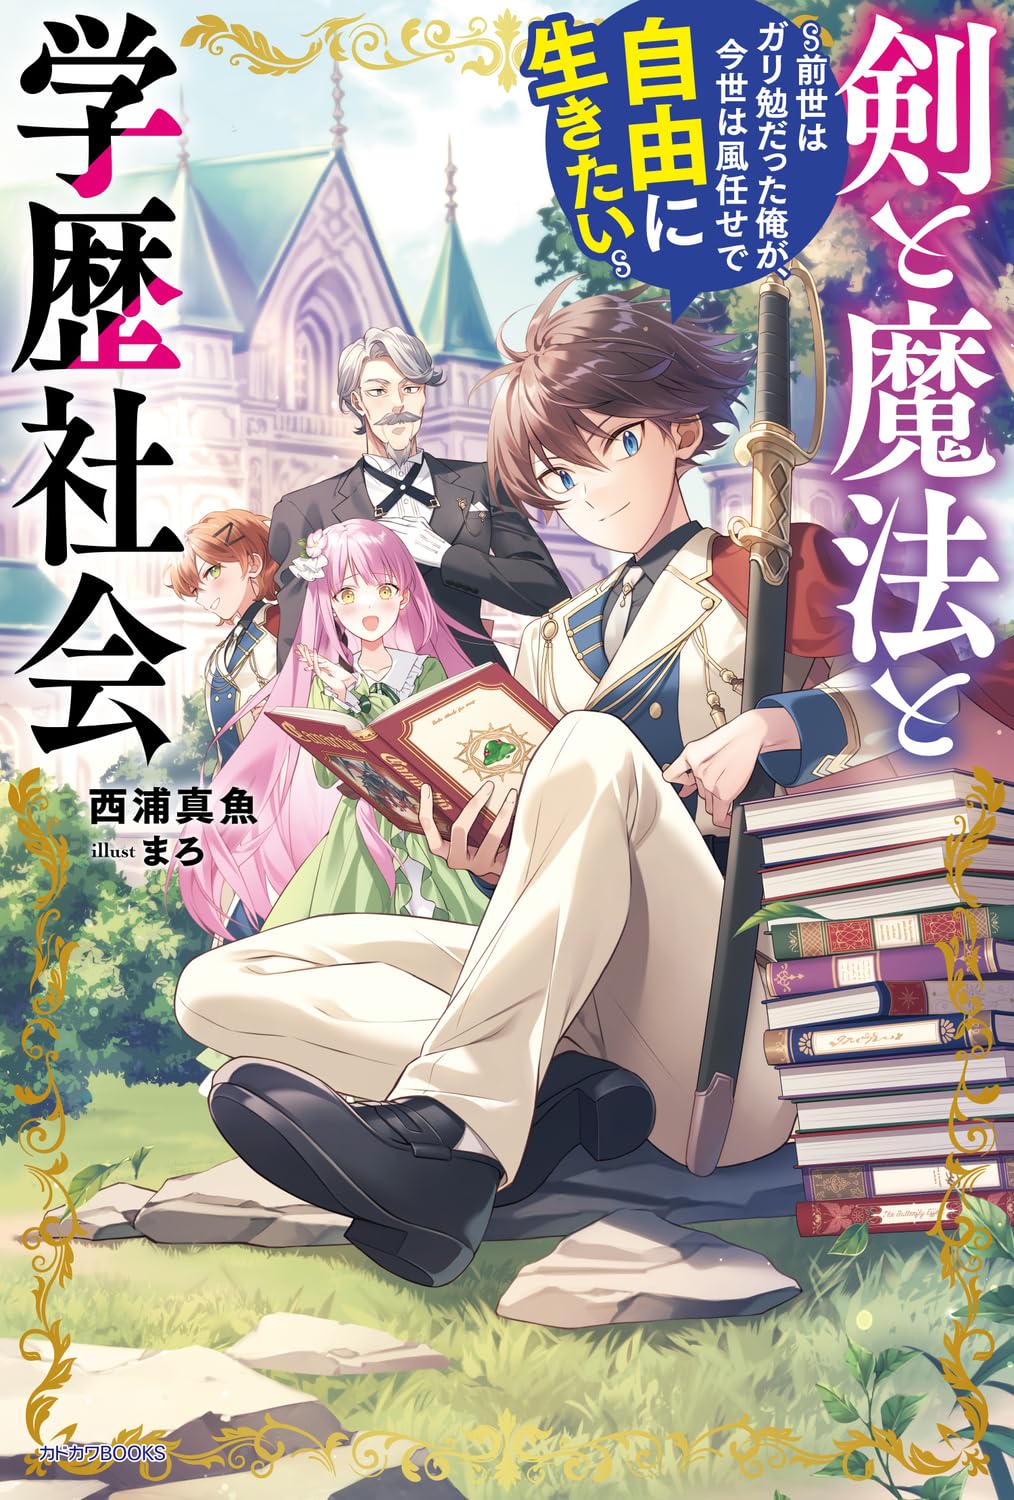 Dungenon ni Deai e Watashi no Shiawase – Light Novels mais vendidas (Julho  10 – Julho 16) - IntoxiAnime